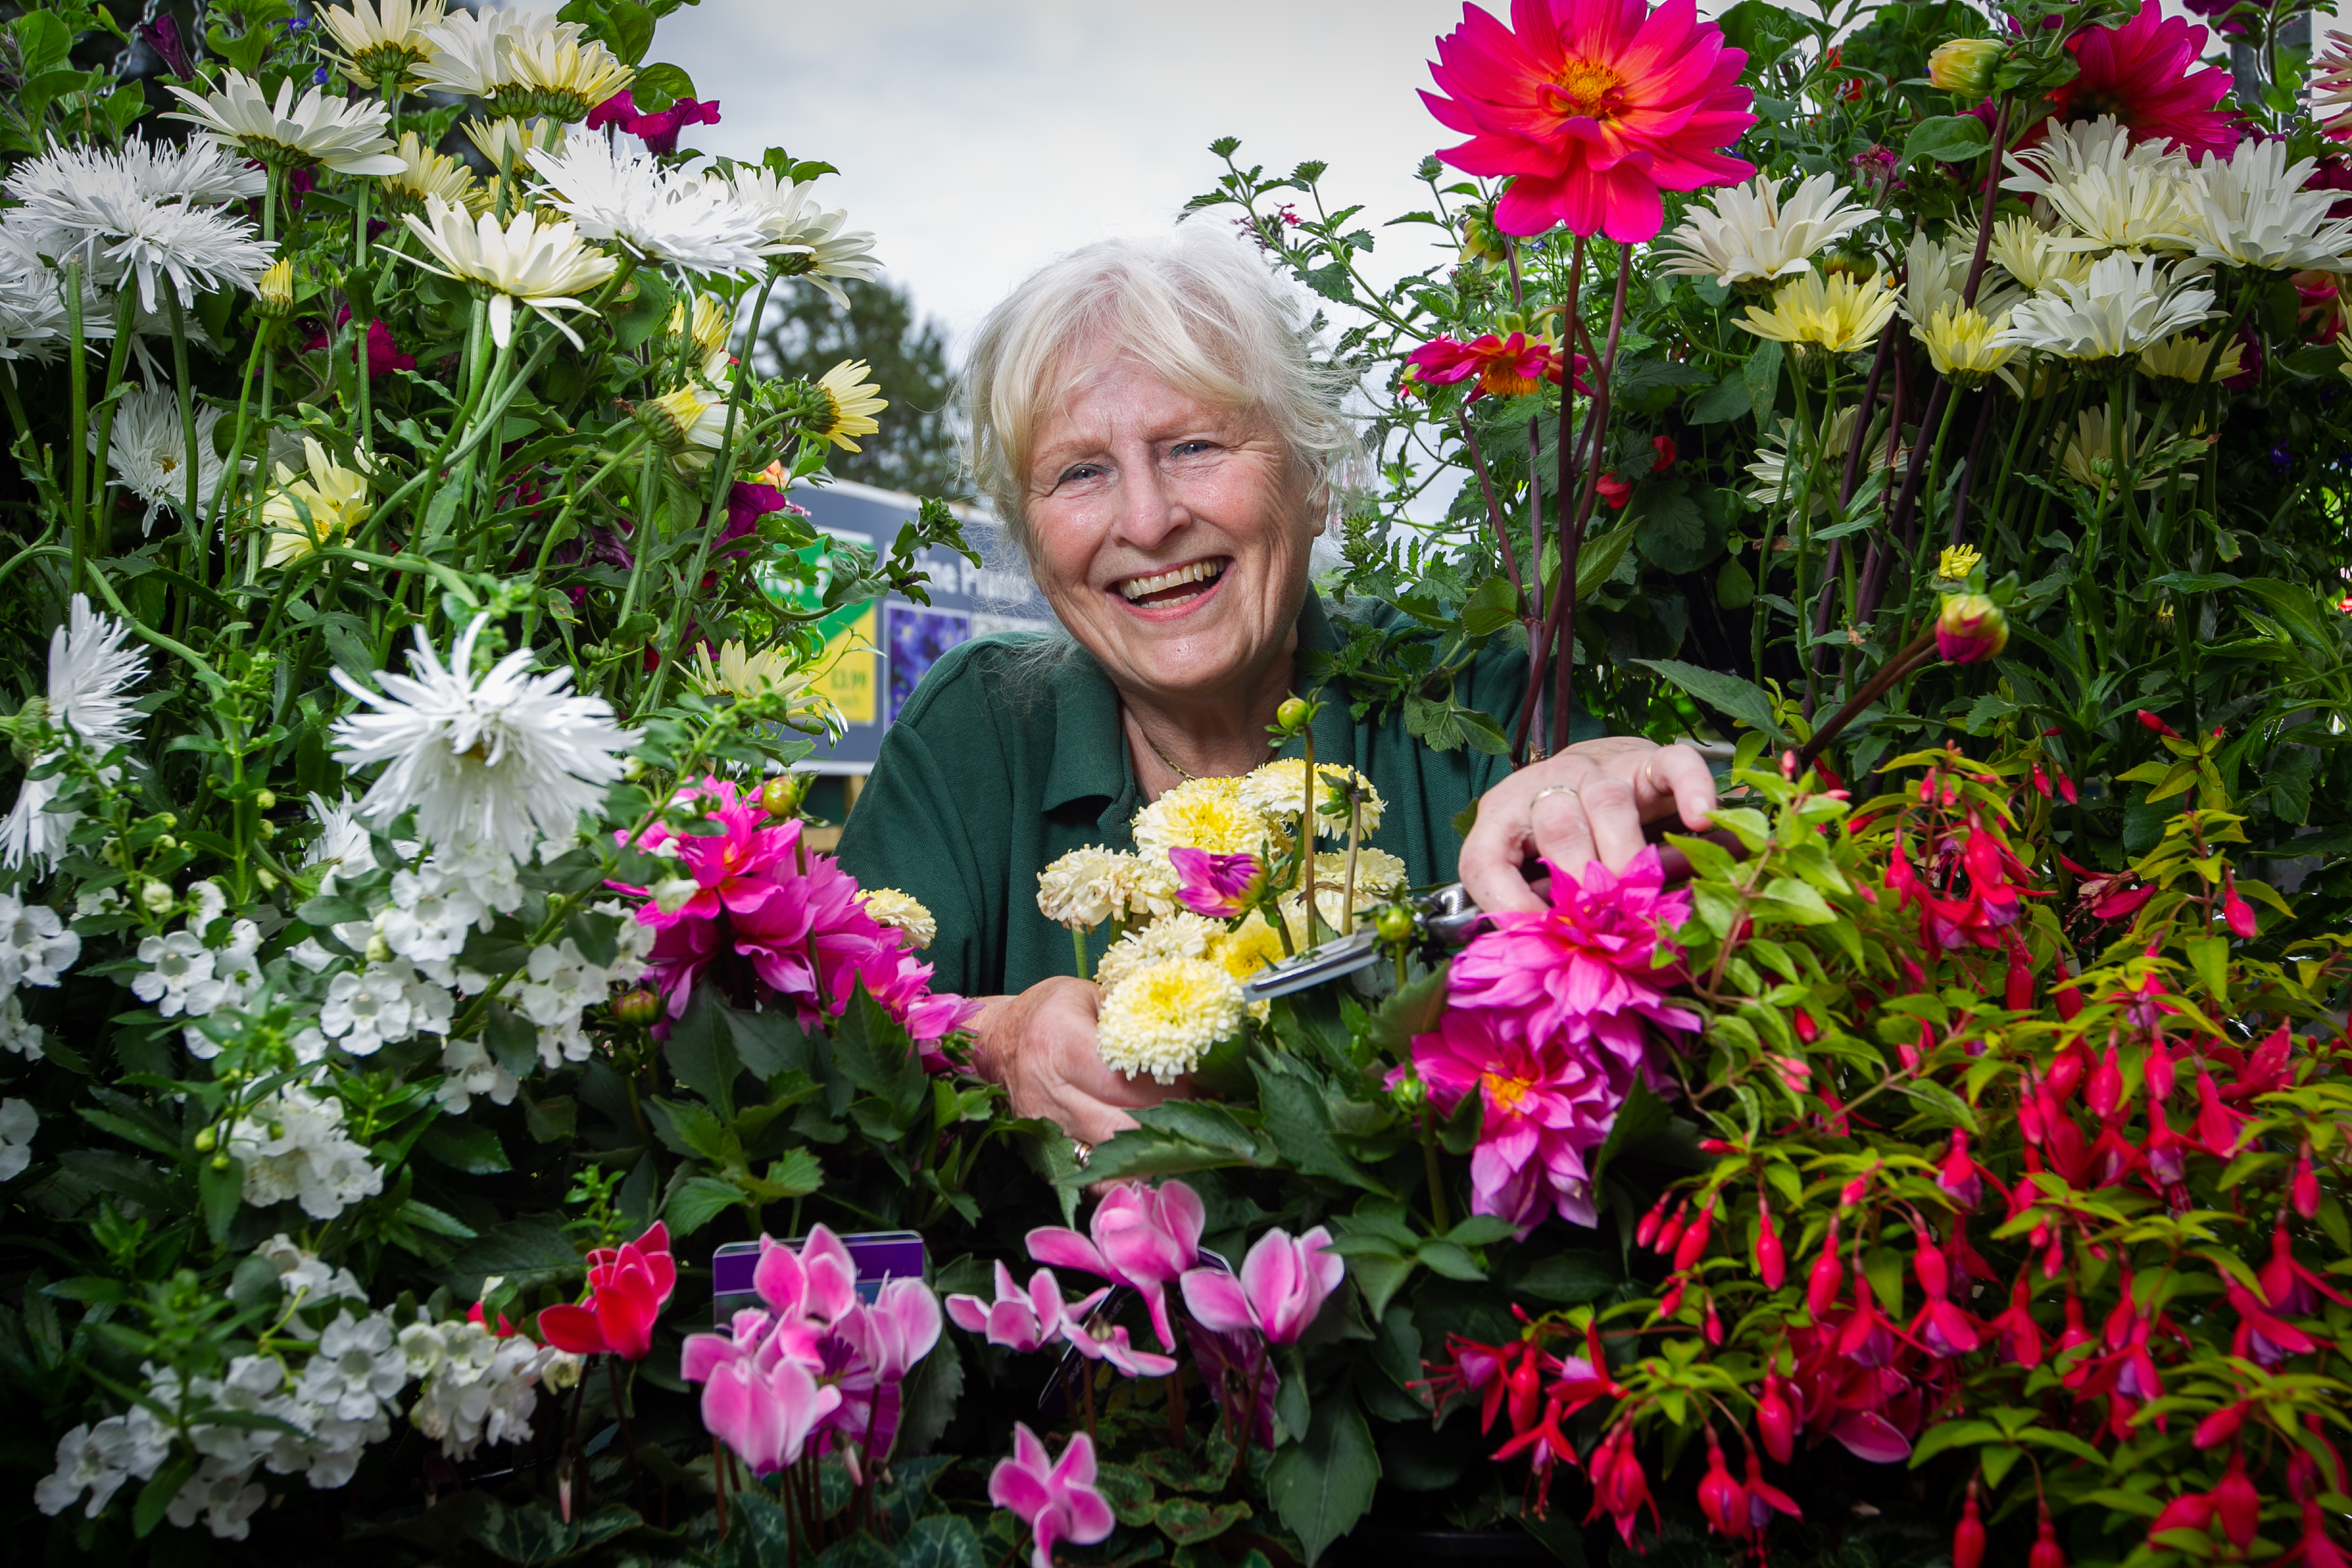 Sheila McEwan, who is still working after retirement at Dobbies Garden Centre